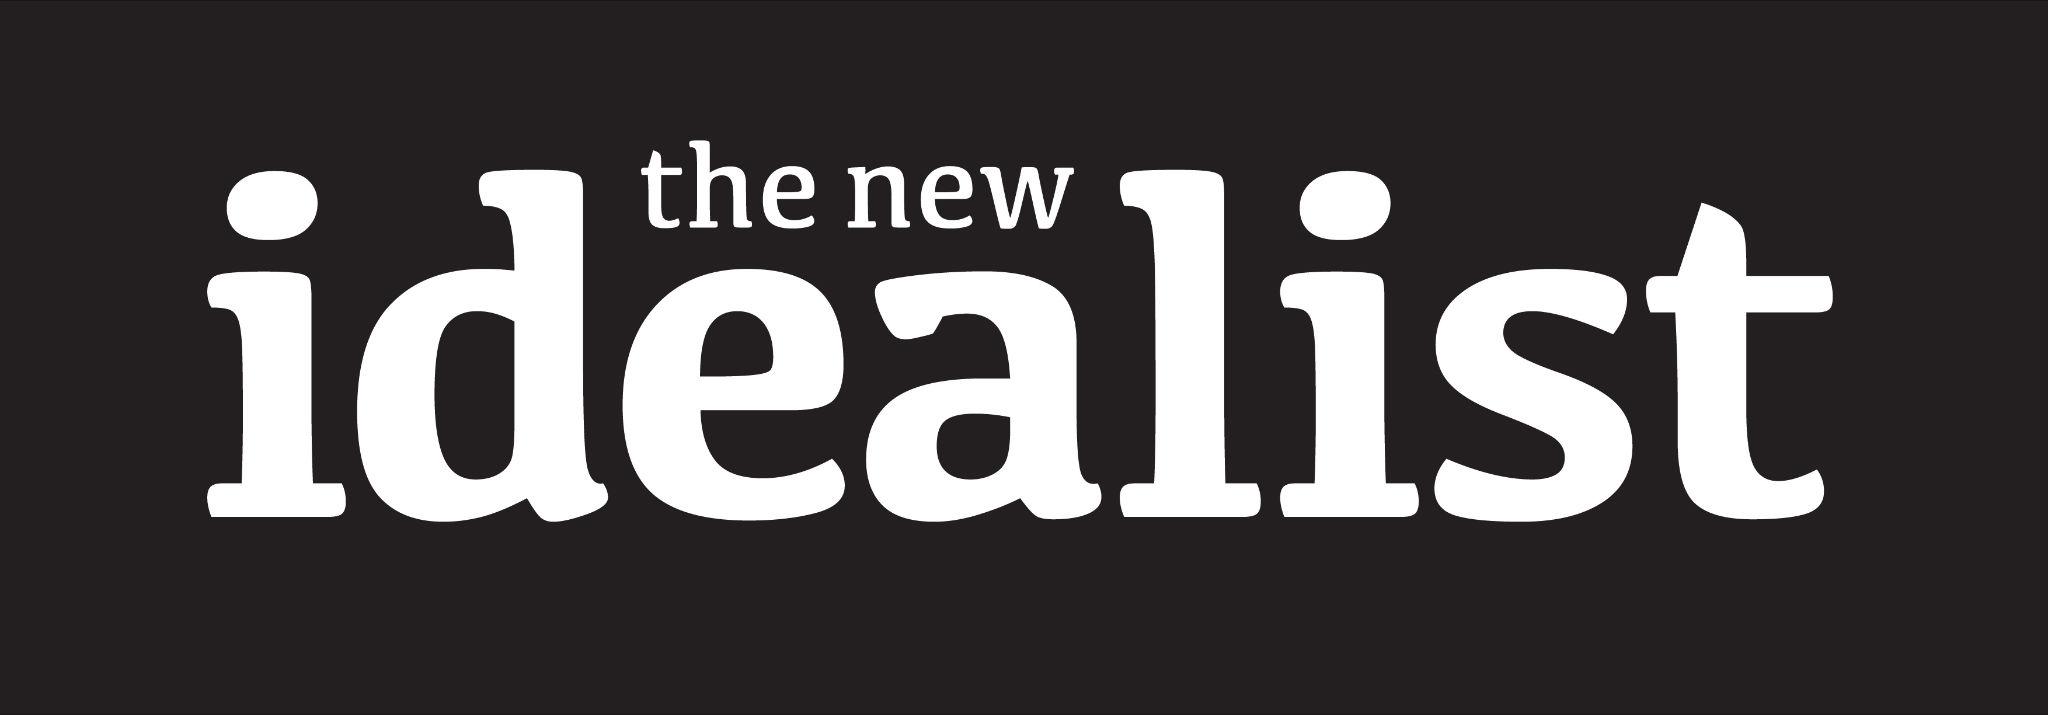 Idealist Logo - The New Idealist Logo